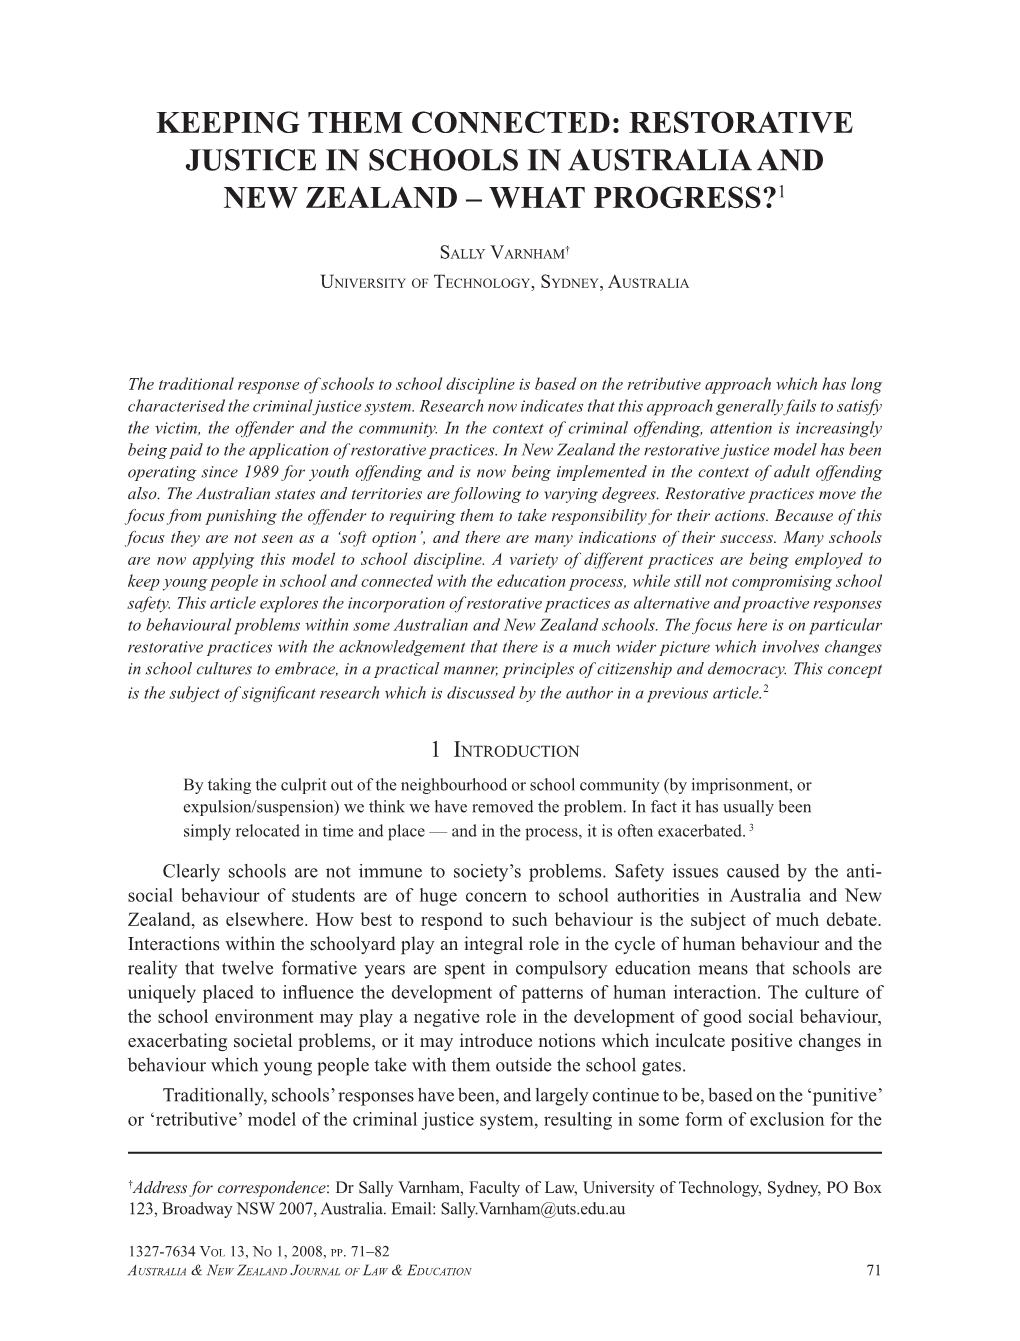 Restorative Justice in Schools in Australia and New Zealand – What Progress?1